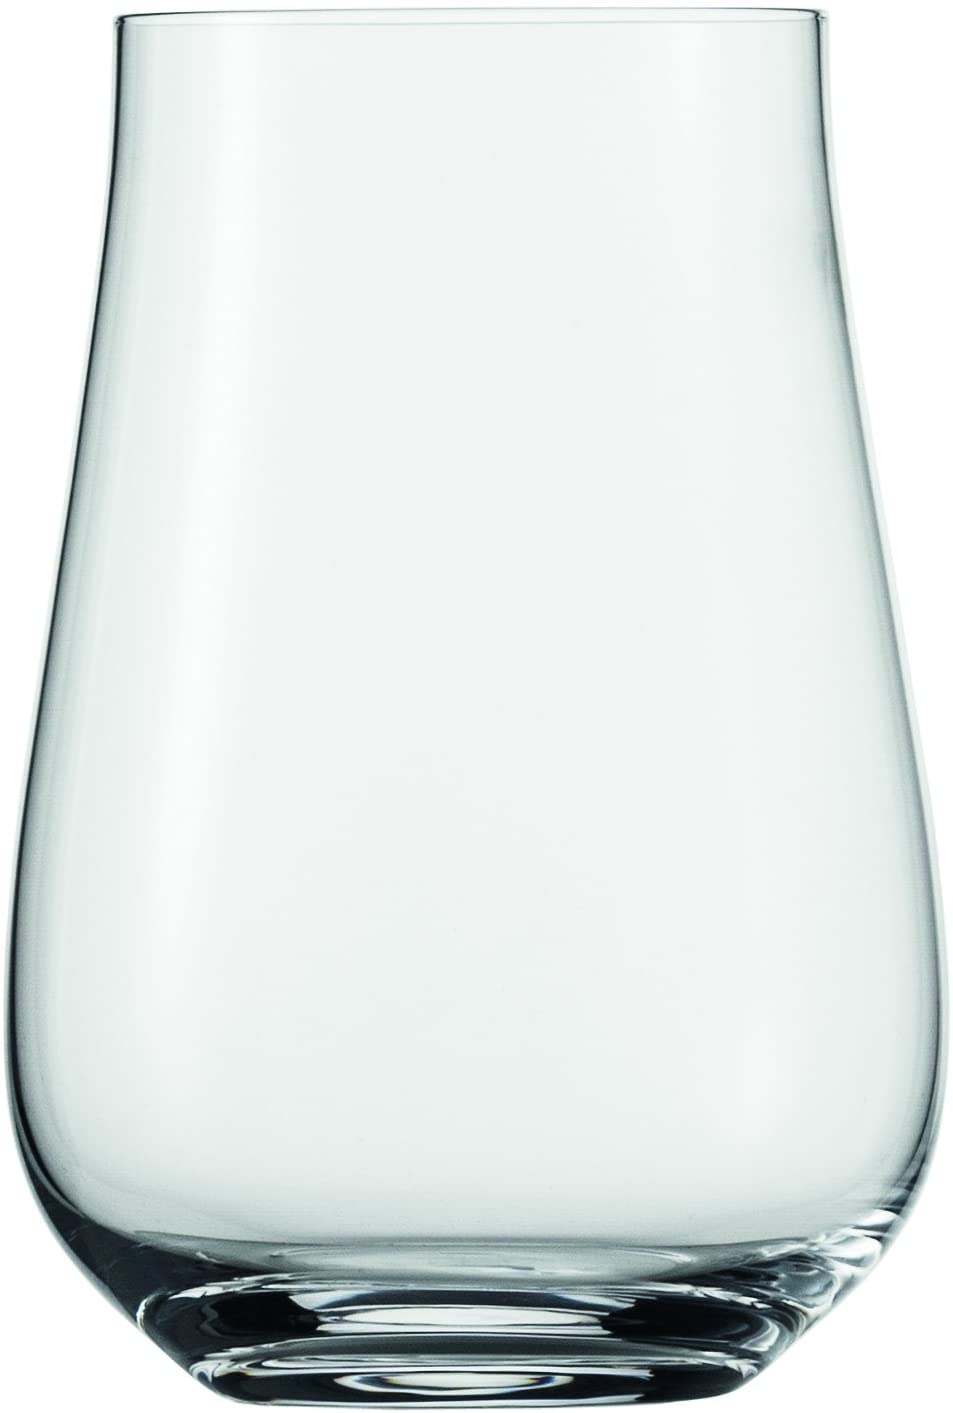 Schott Zwiesel Life 6-Piece Long Drink Glasses Tritan Crystal Glass, Transparent, 9 cm, 6